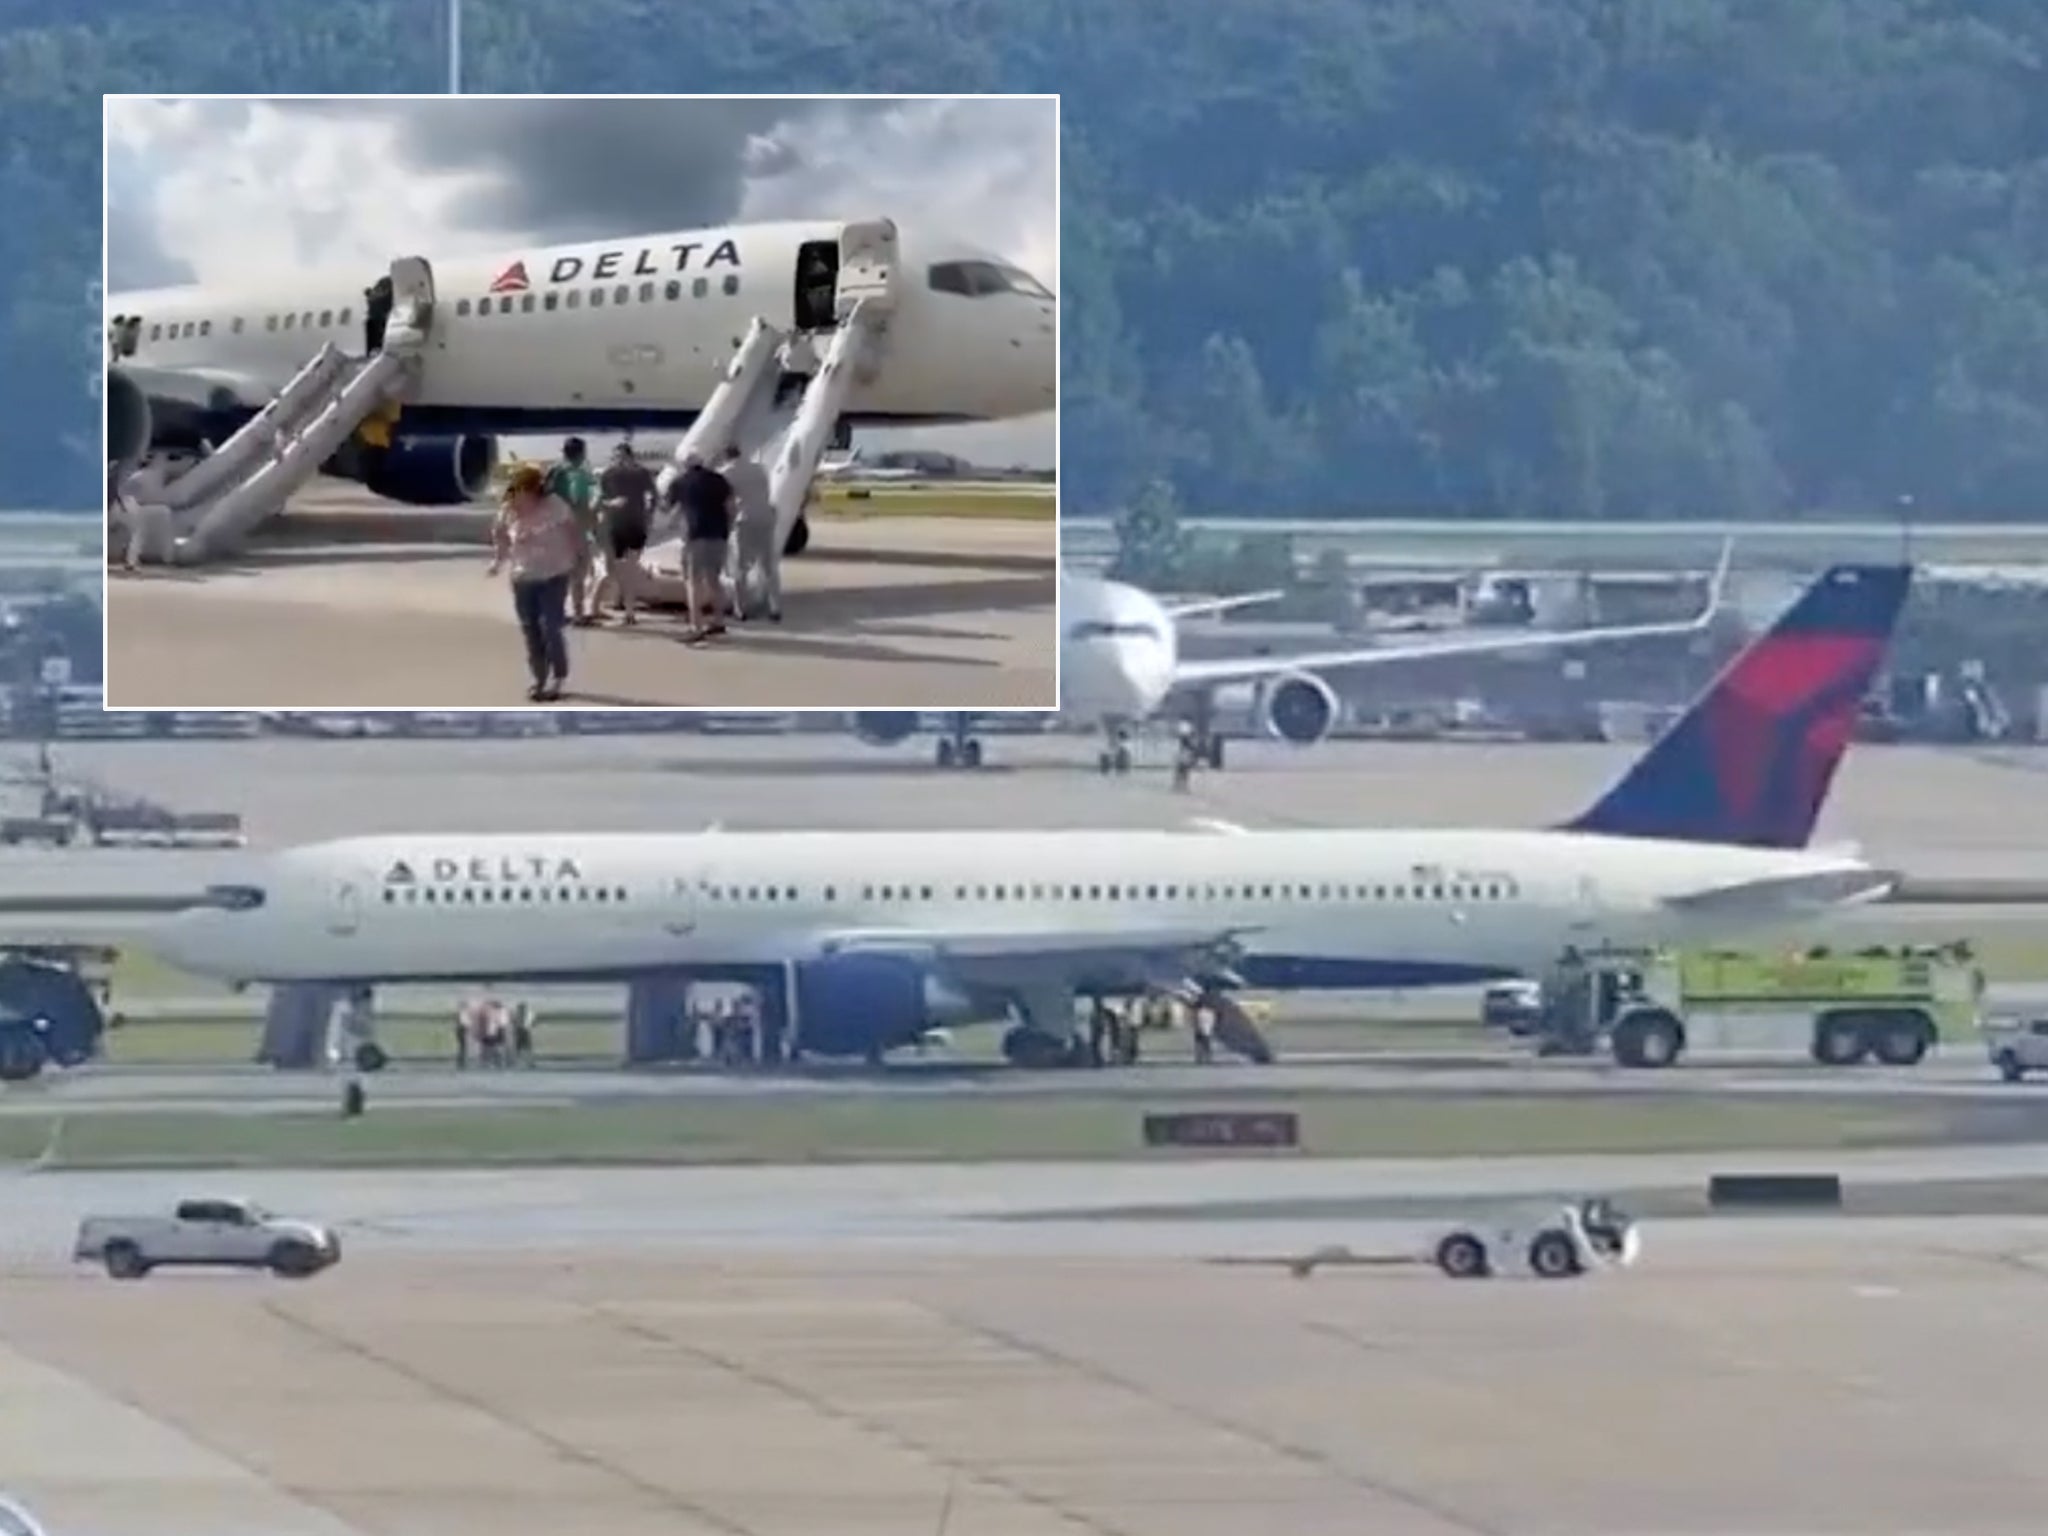 Passengers evacuating the plane after landing in Atlanta